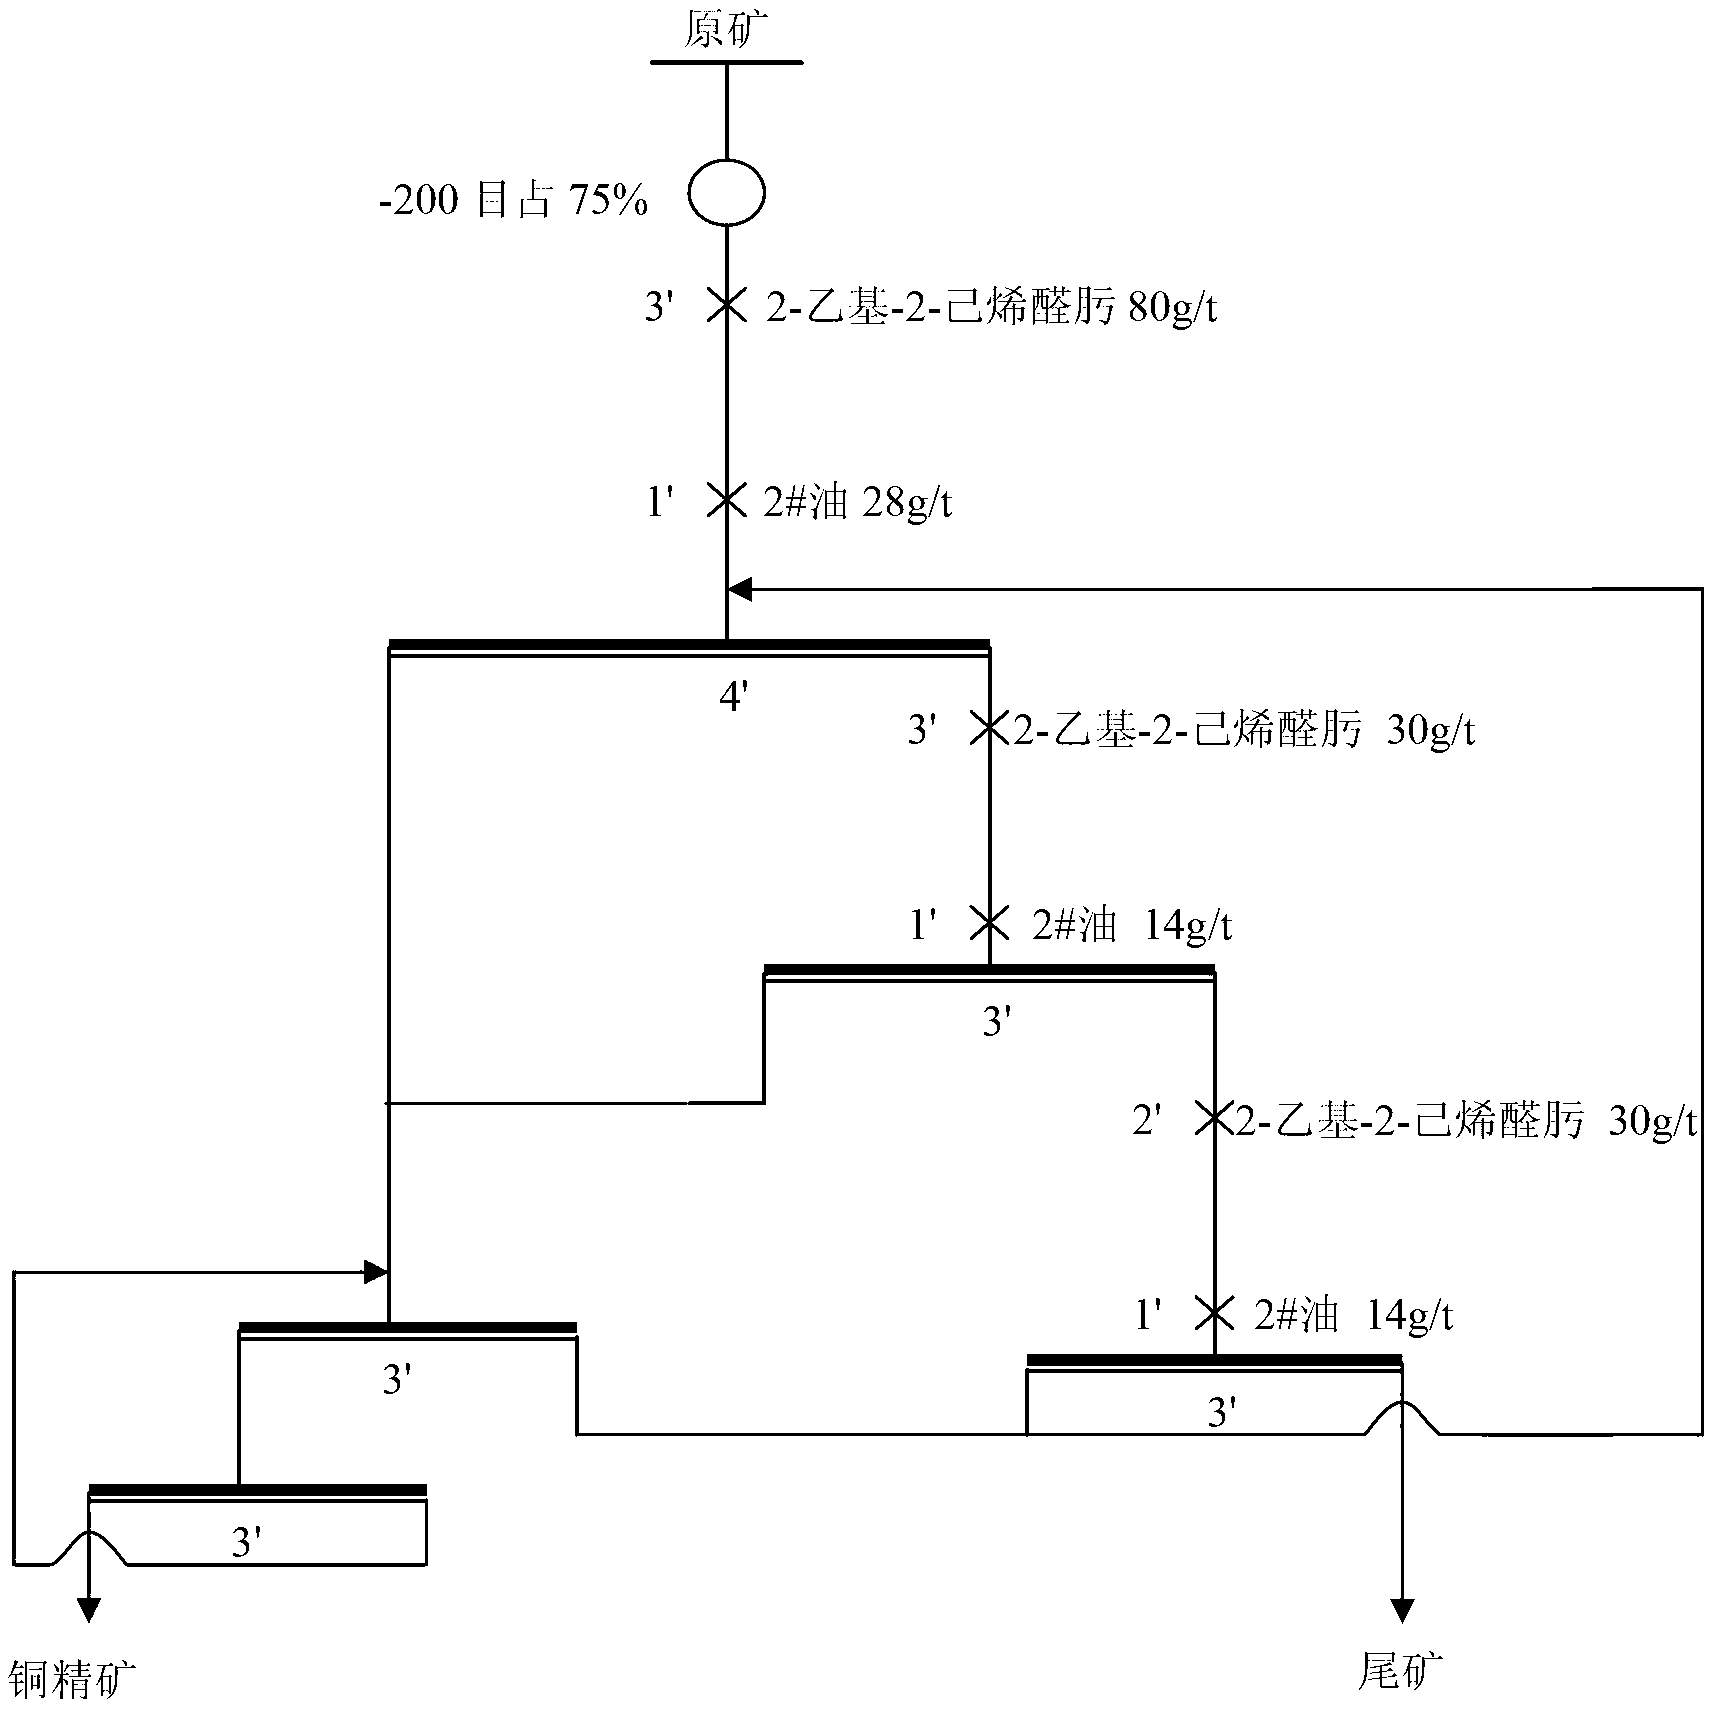 Application method of 2-ethyl-2-hexenealdoxime in mineral flotation